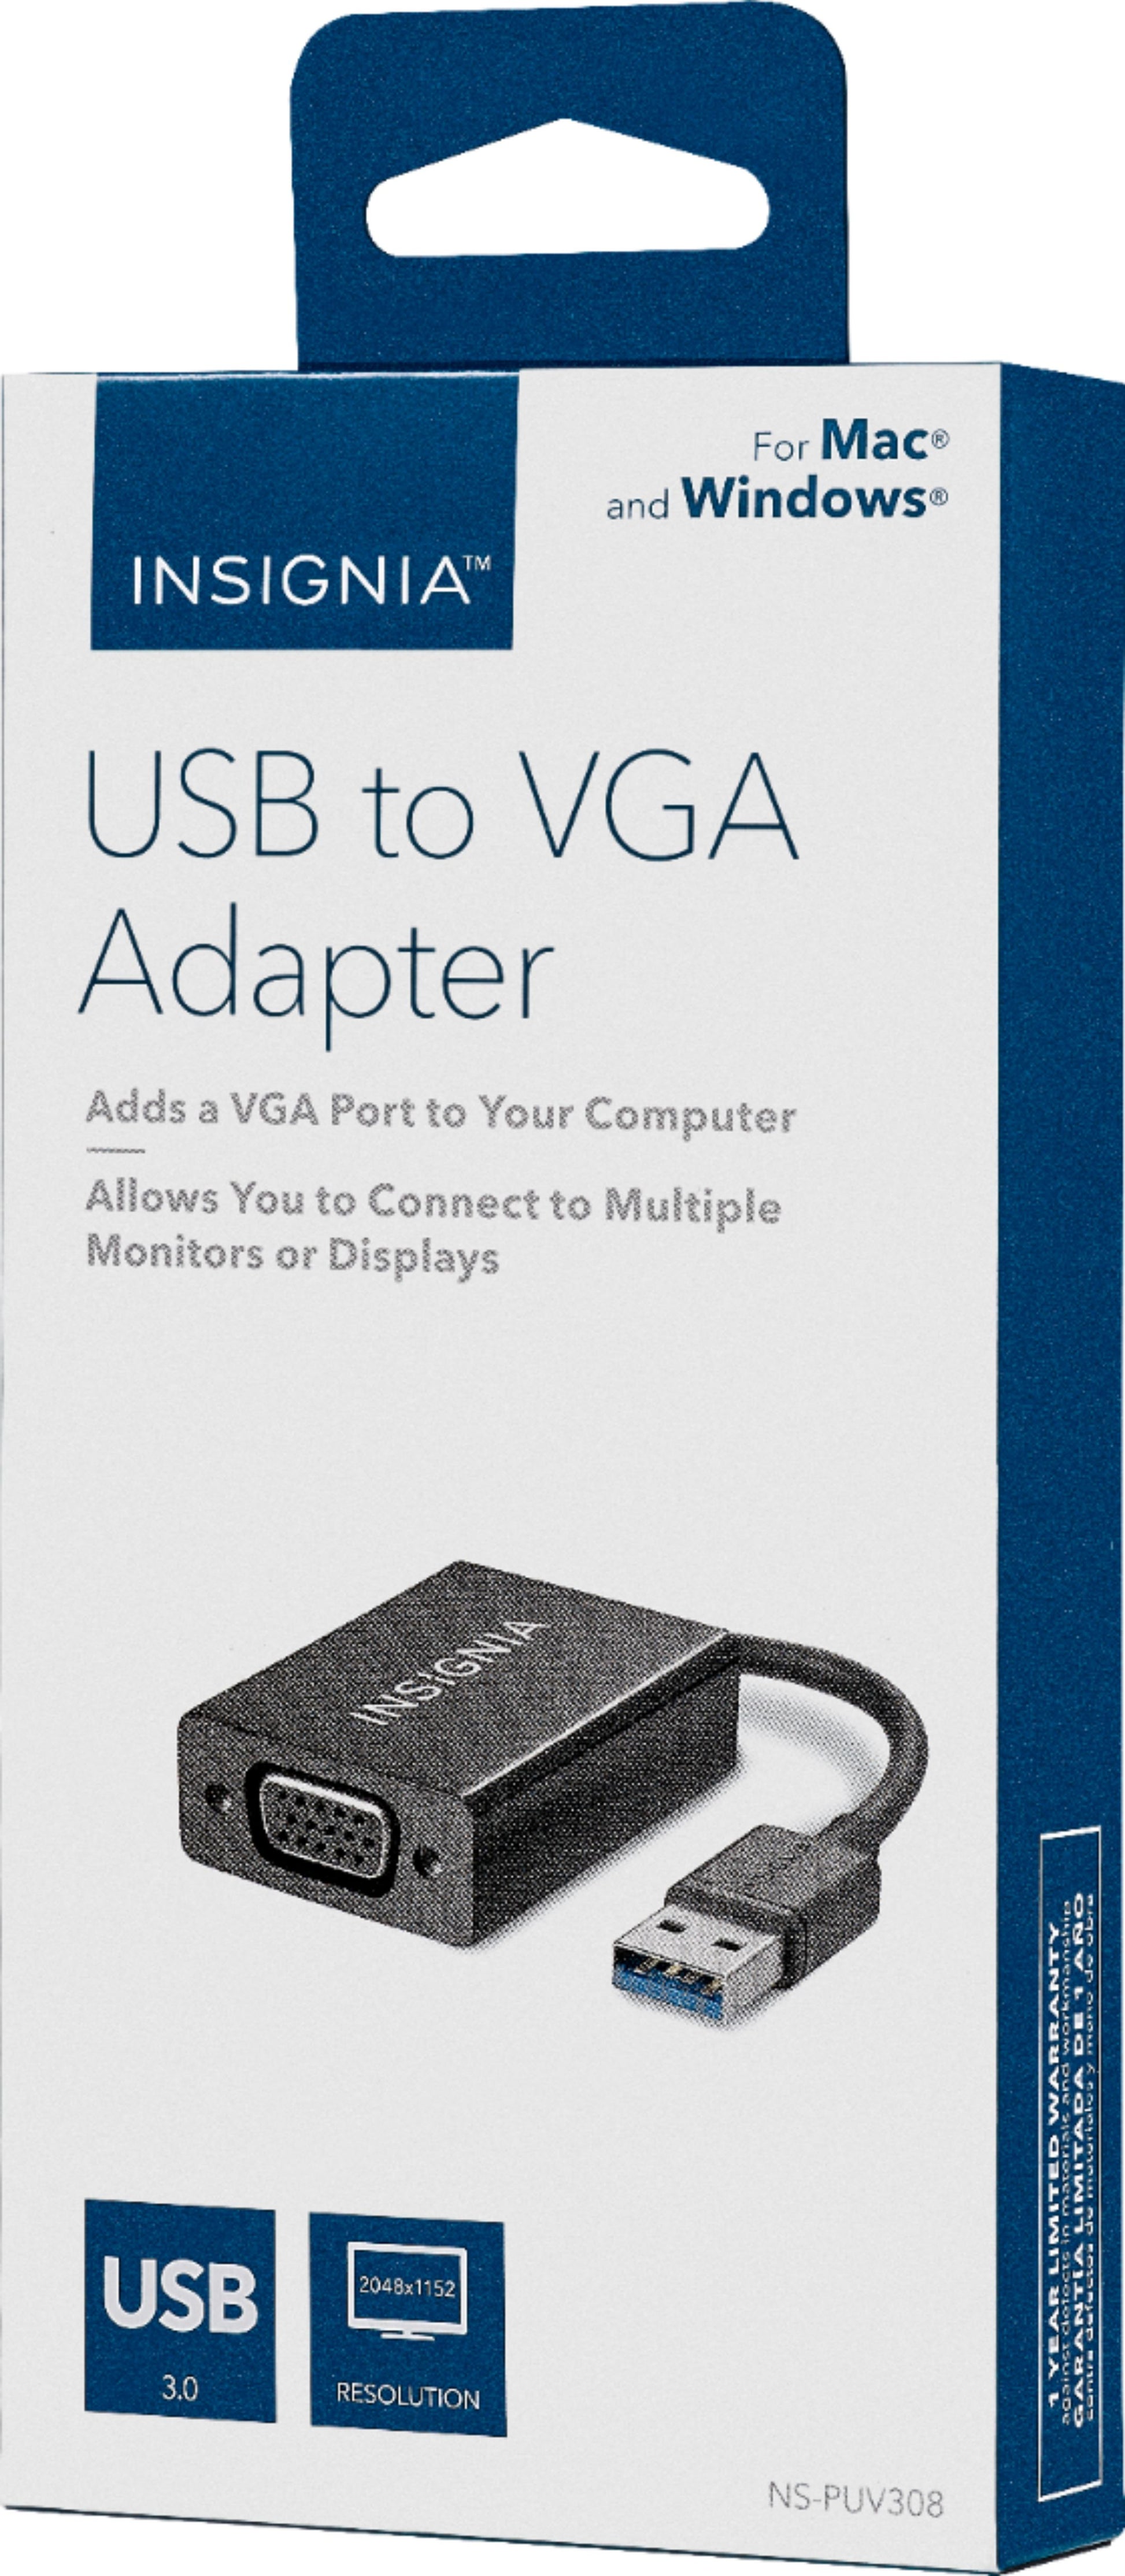 Insignia - USB to VGA Adapter - Rekes Sales